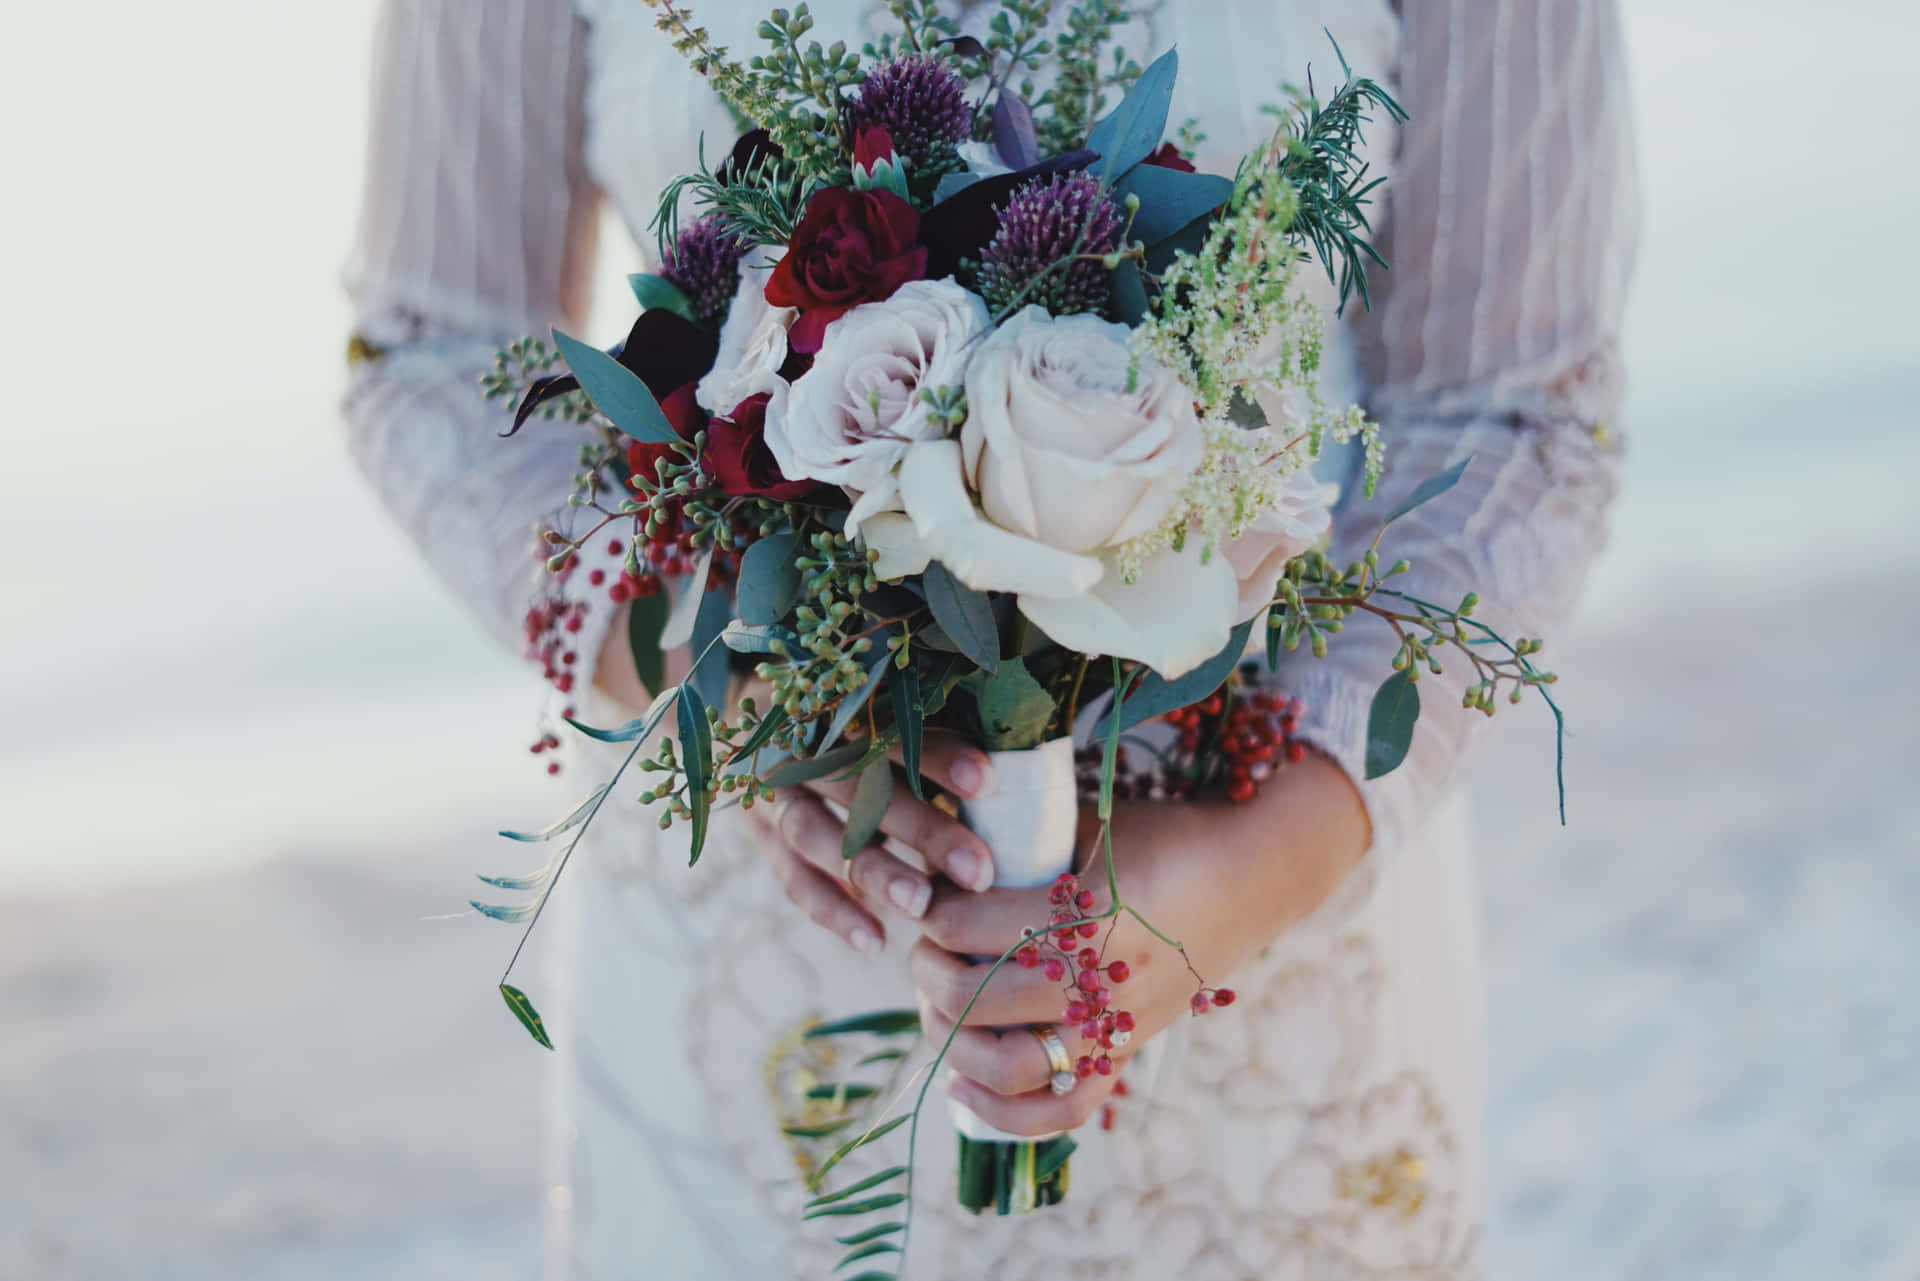 Stunning wedding bouquet in the hands of a beautiful bride Wallpaper